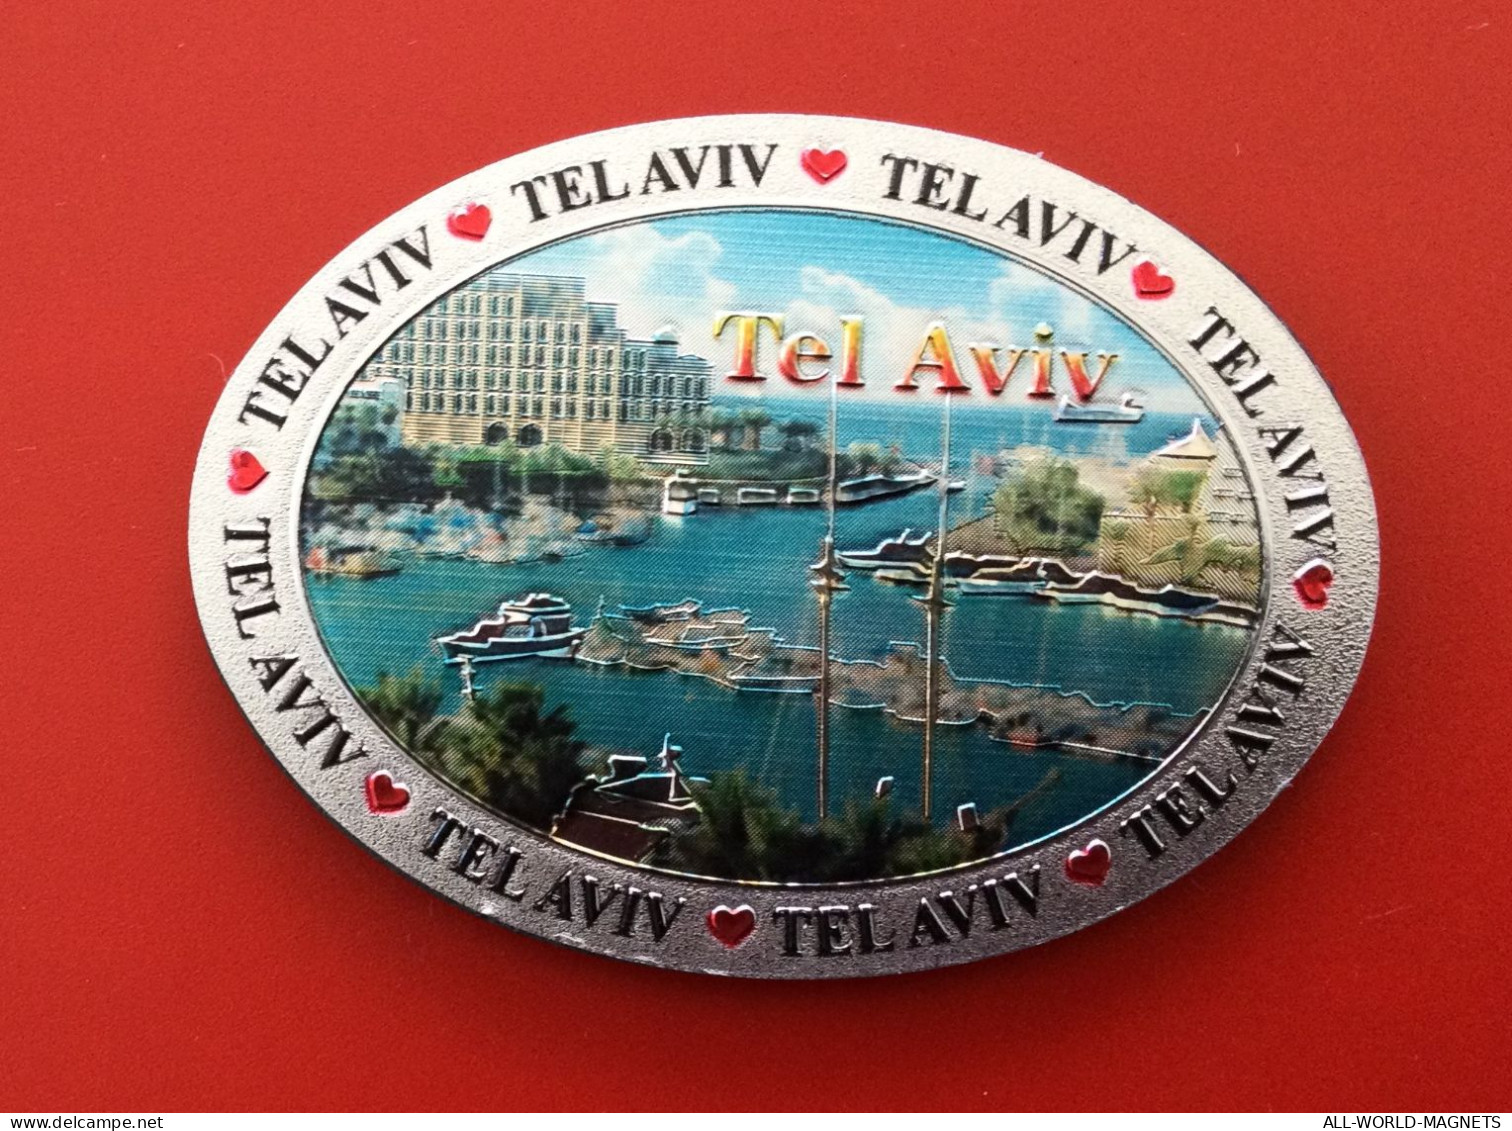 Tel Aviv Panoramic View Souvenir Fridge Magnet, Israel - Tourism